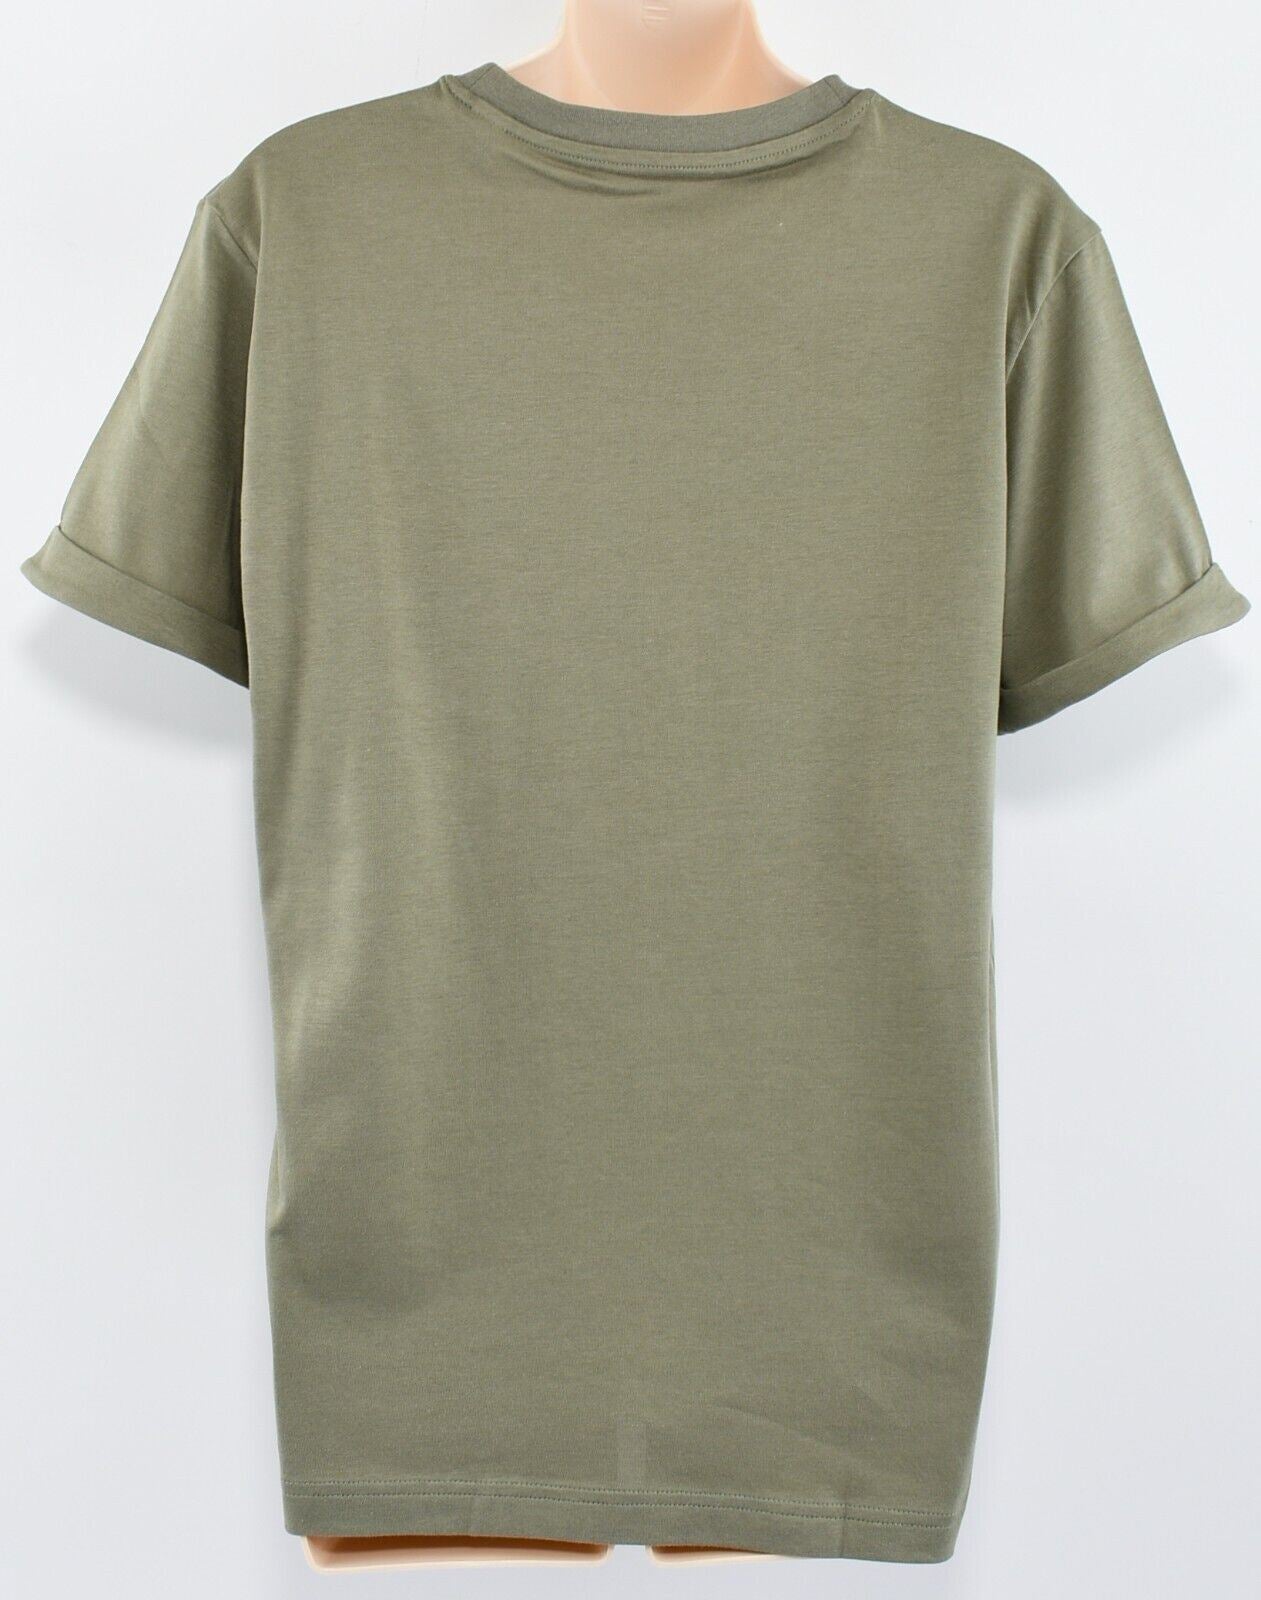 ADIDAS Women's Crew Neck Boyfriend T-shirt, Tee, Legacy Green, size XS (UK 4-6)